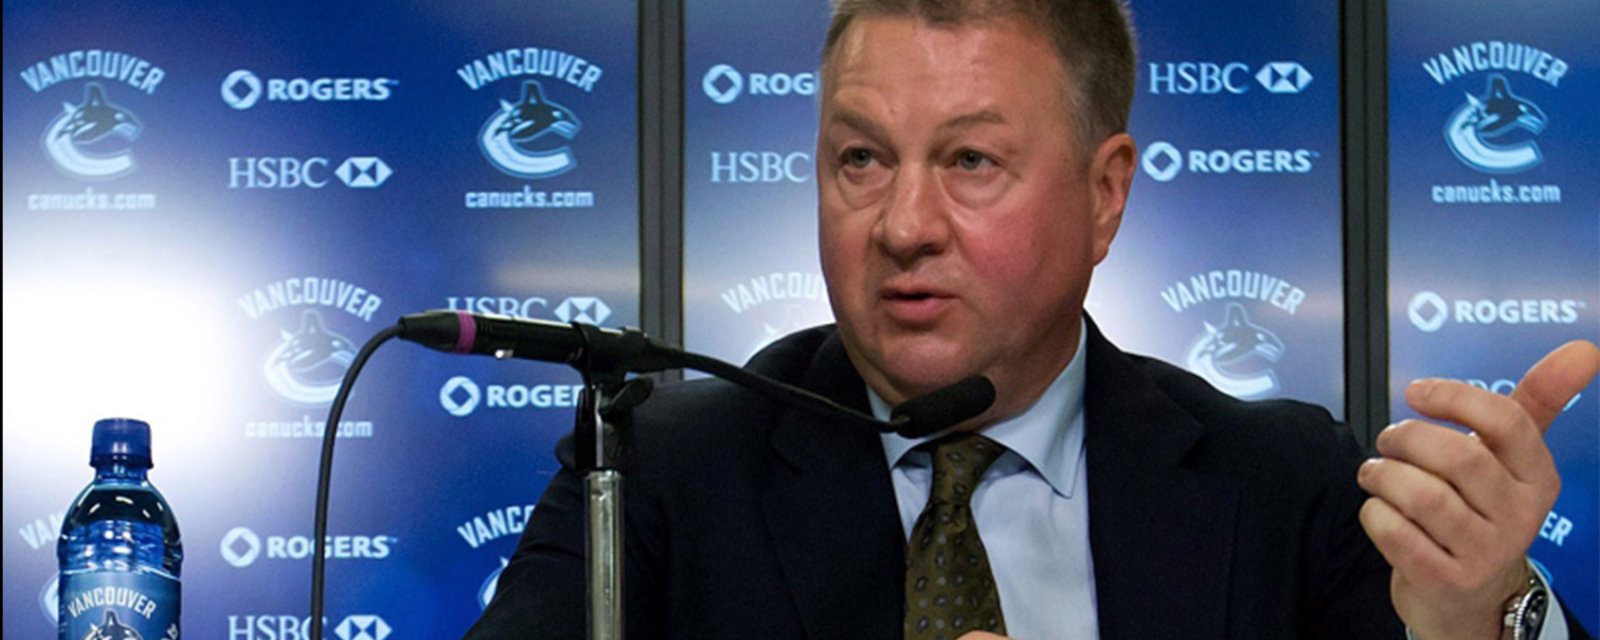 Former Canucks GM Mike Gillis responds to rumors of Oilers hiring